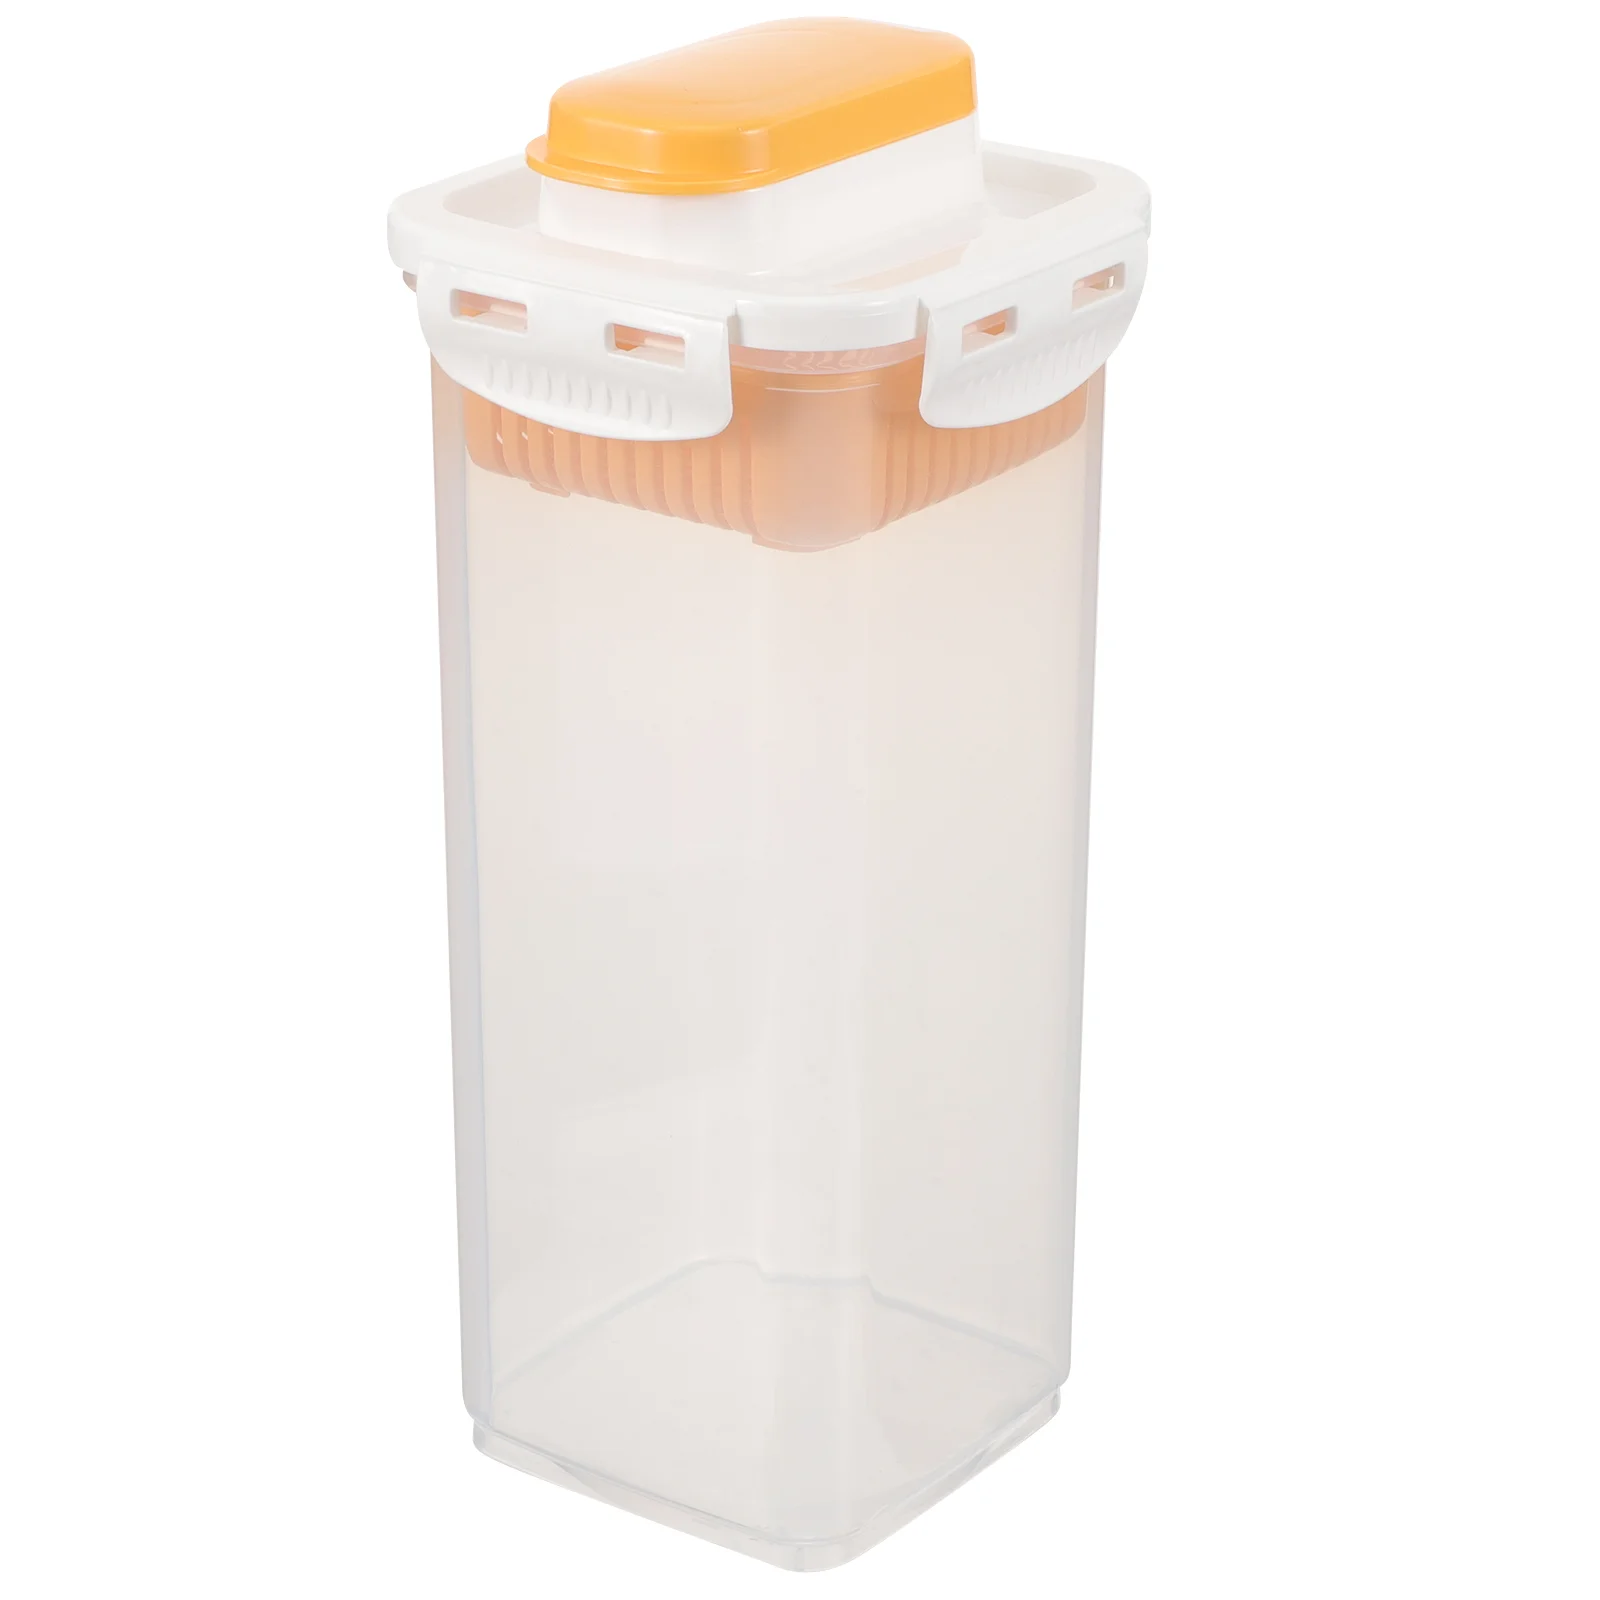 

Storage Box Plastic Containers Condensate Beads Bucket Laundry Detergent Holder Tank Bin Powder Organization Lidded